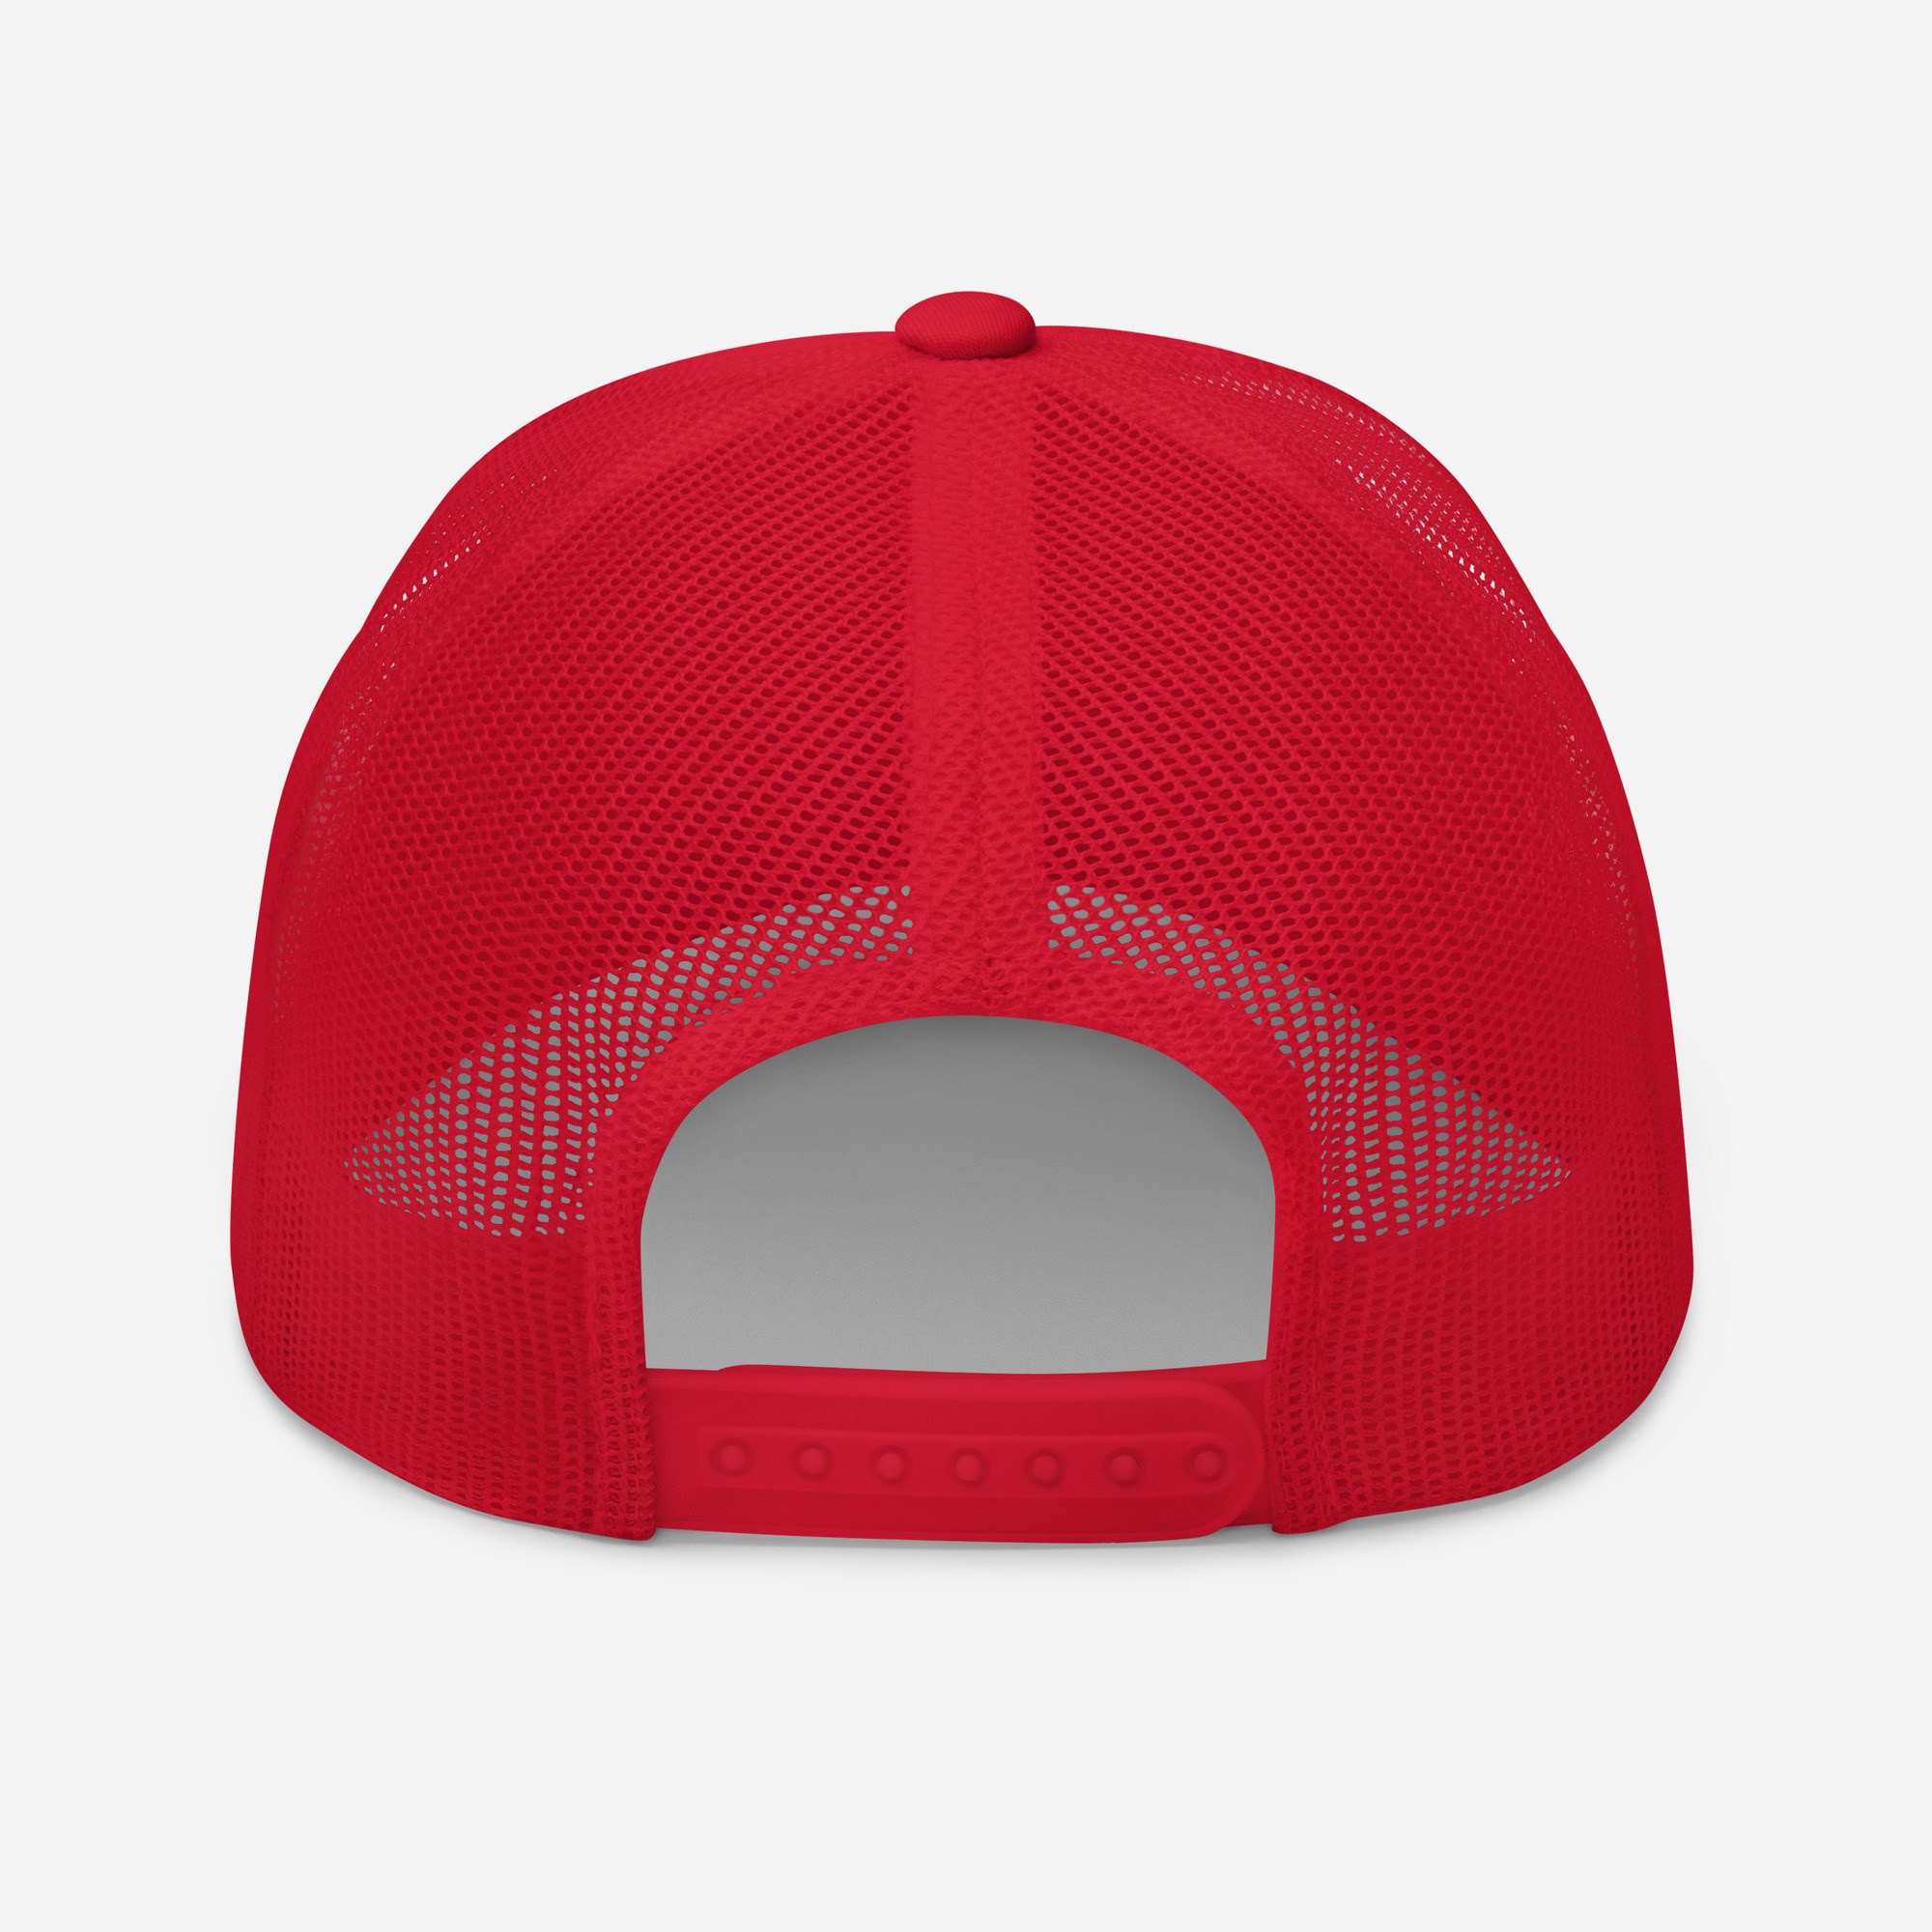 retro-trucker-hat-red-back-6316911a27bd2.jpg